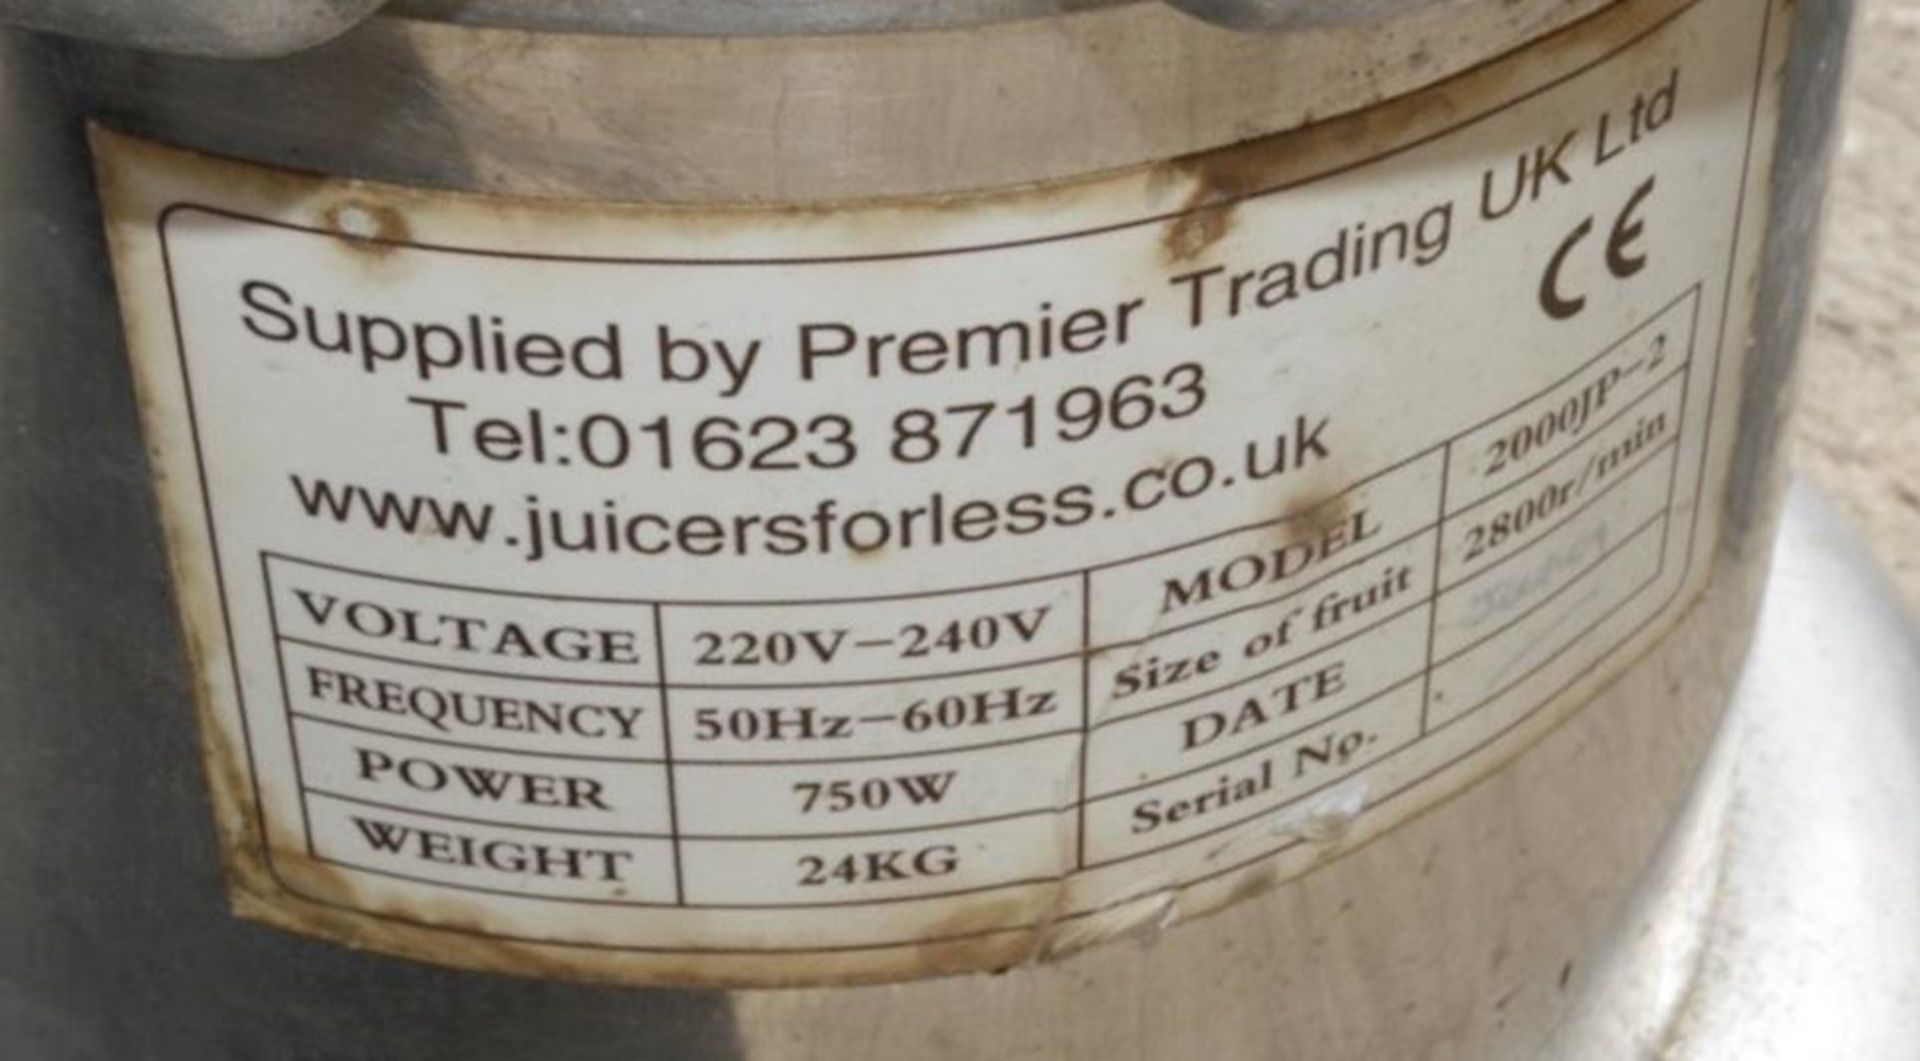 1 x ESPORANGE 2000JP Commercial Juicer Juice Maker - Pre-owned, Taken From An Asian Fusion Restauran - Image 5 of 5